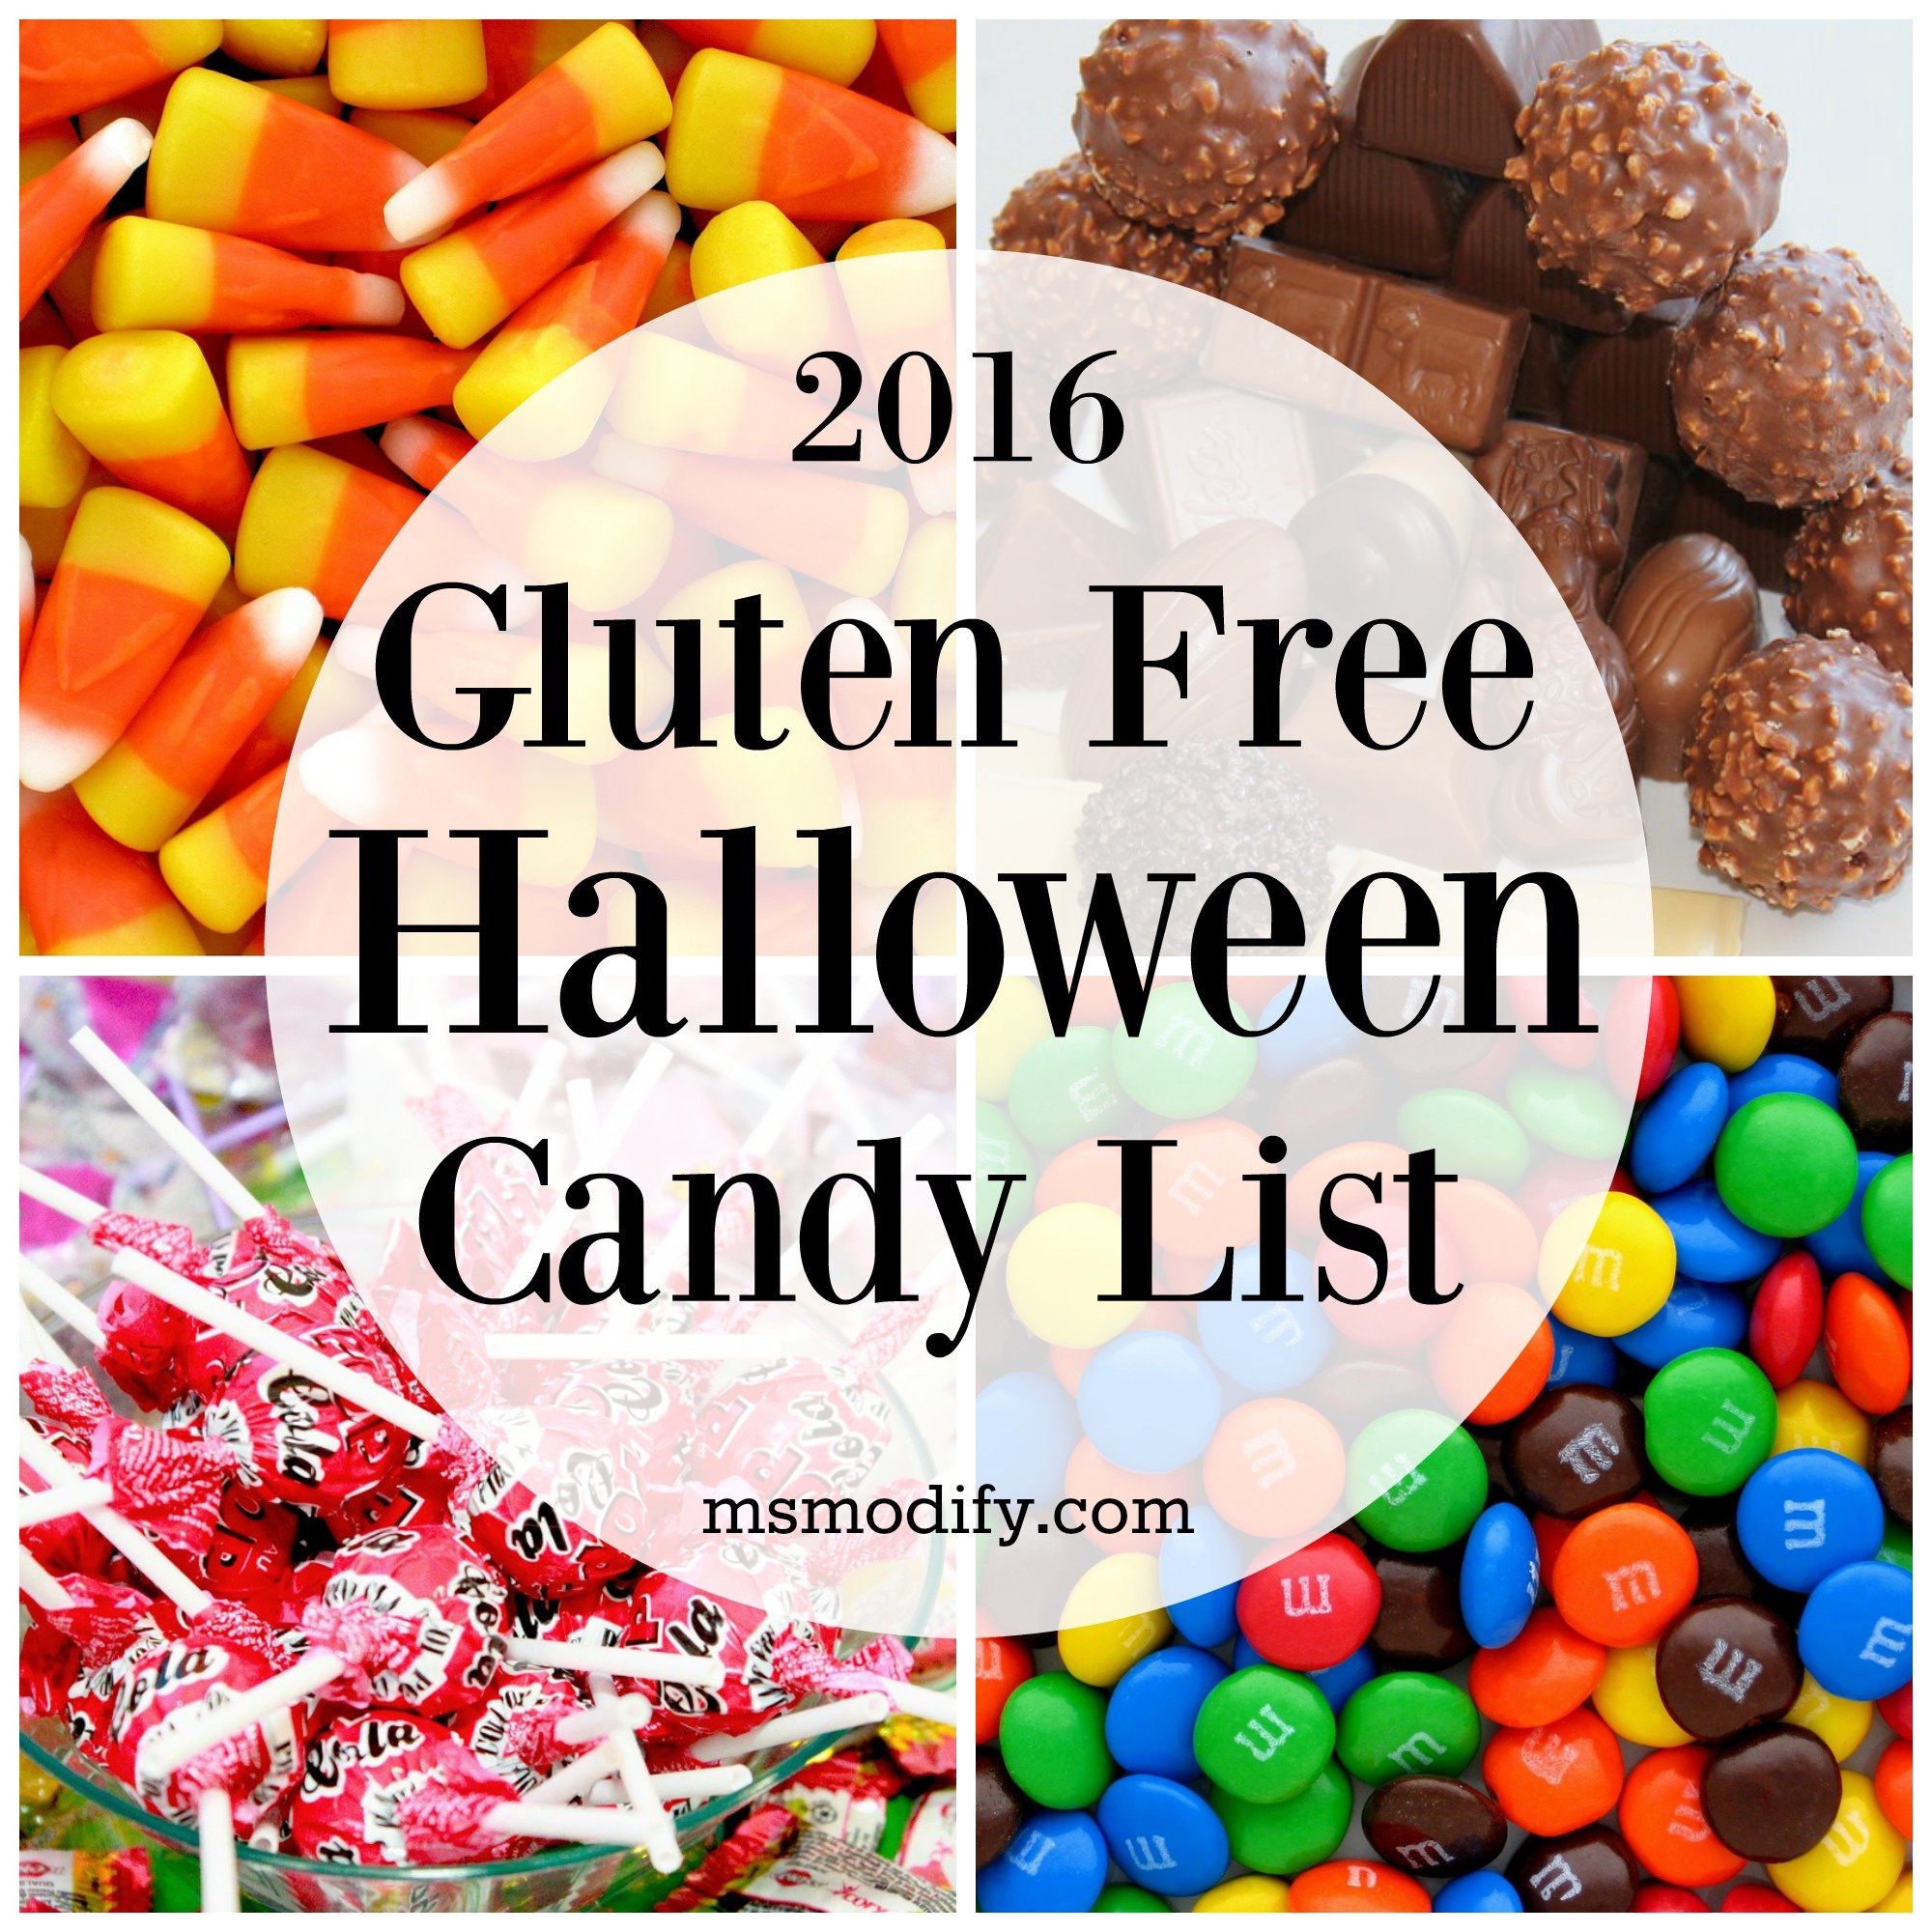 2016 Gluten Free Halloween Candy List